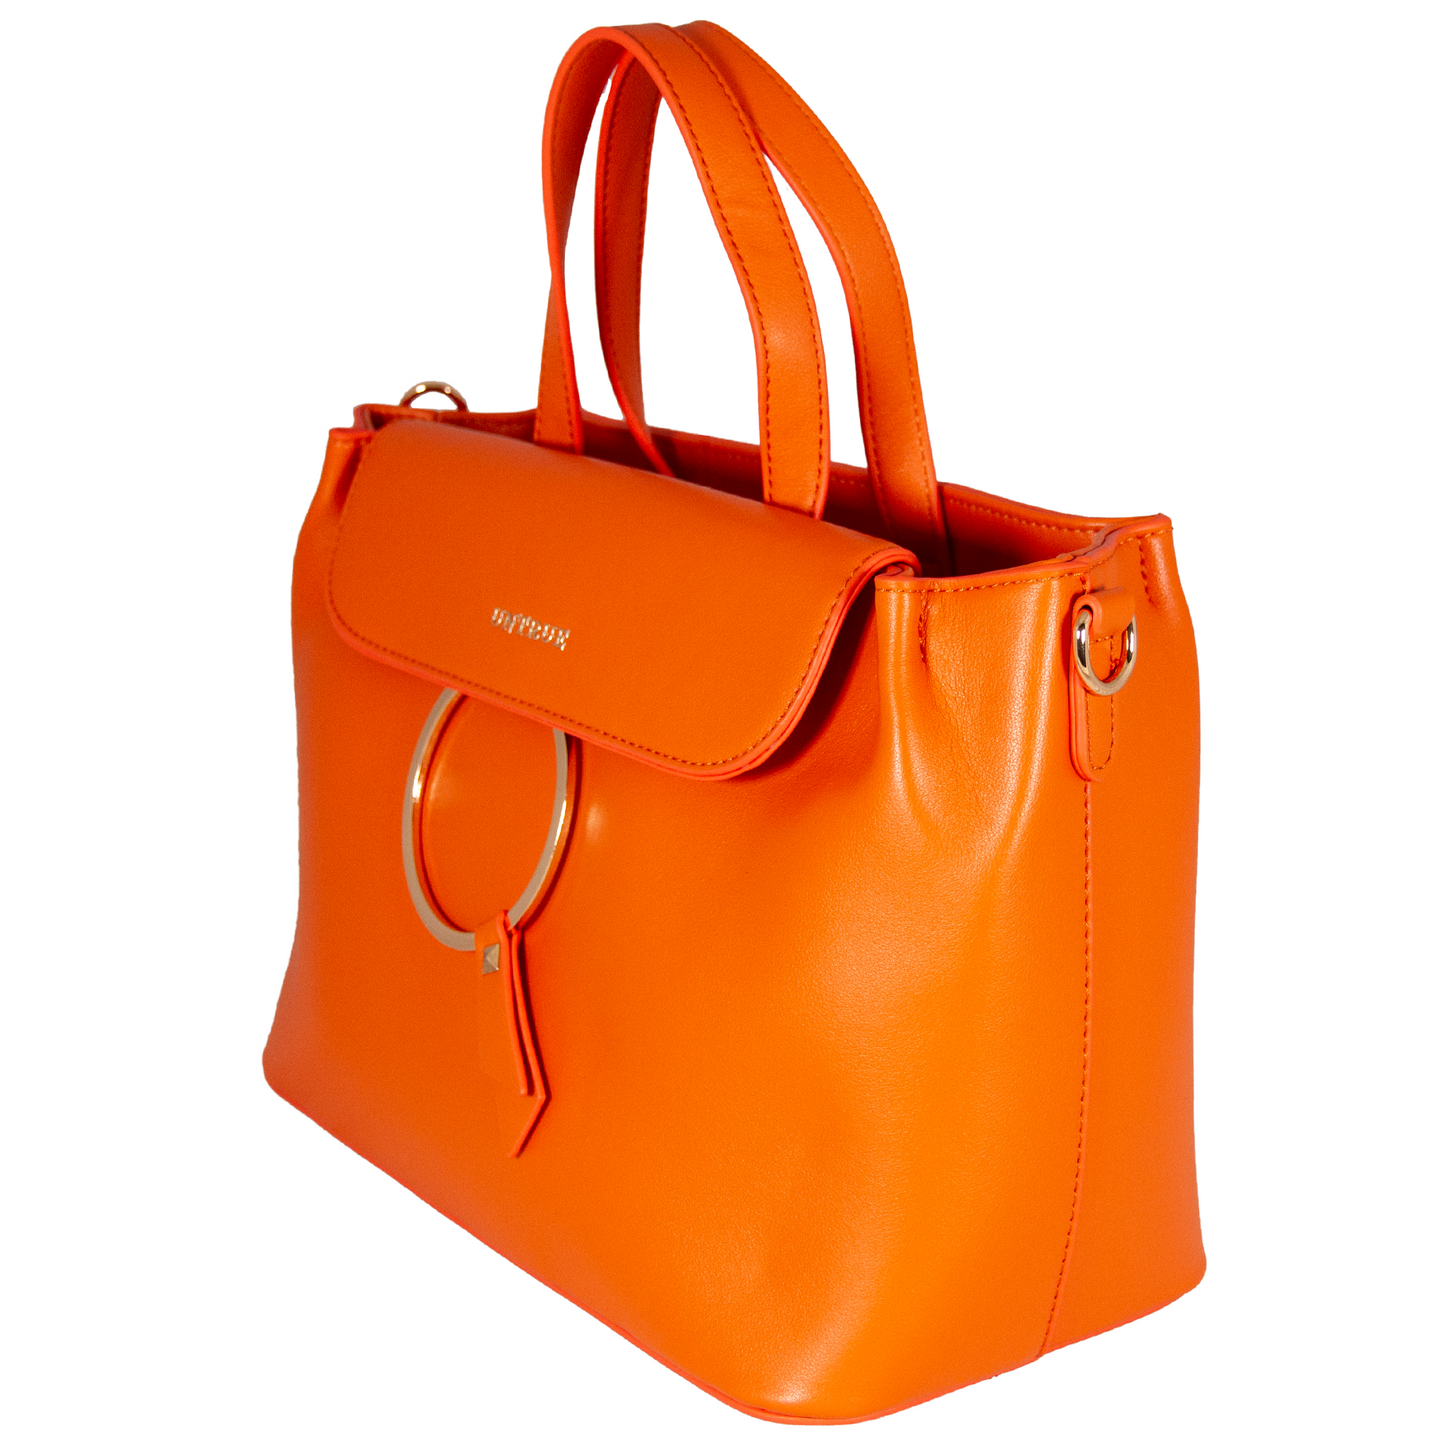 Z5B2 Women’s Charm Handbag - Orange